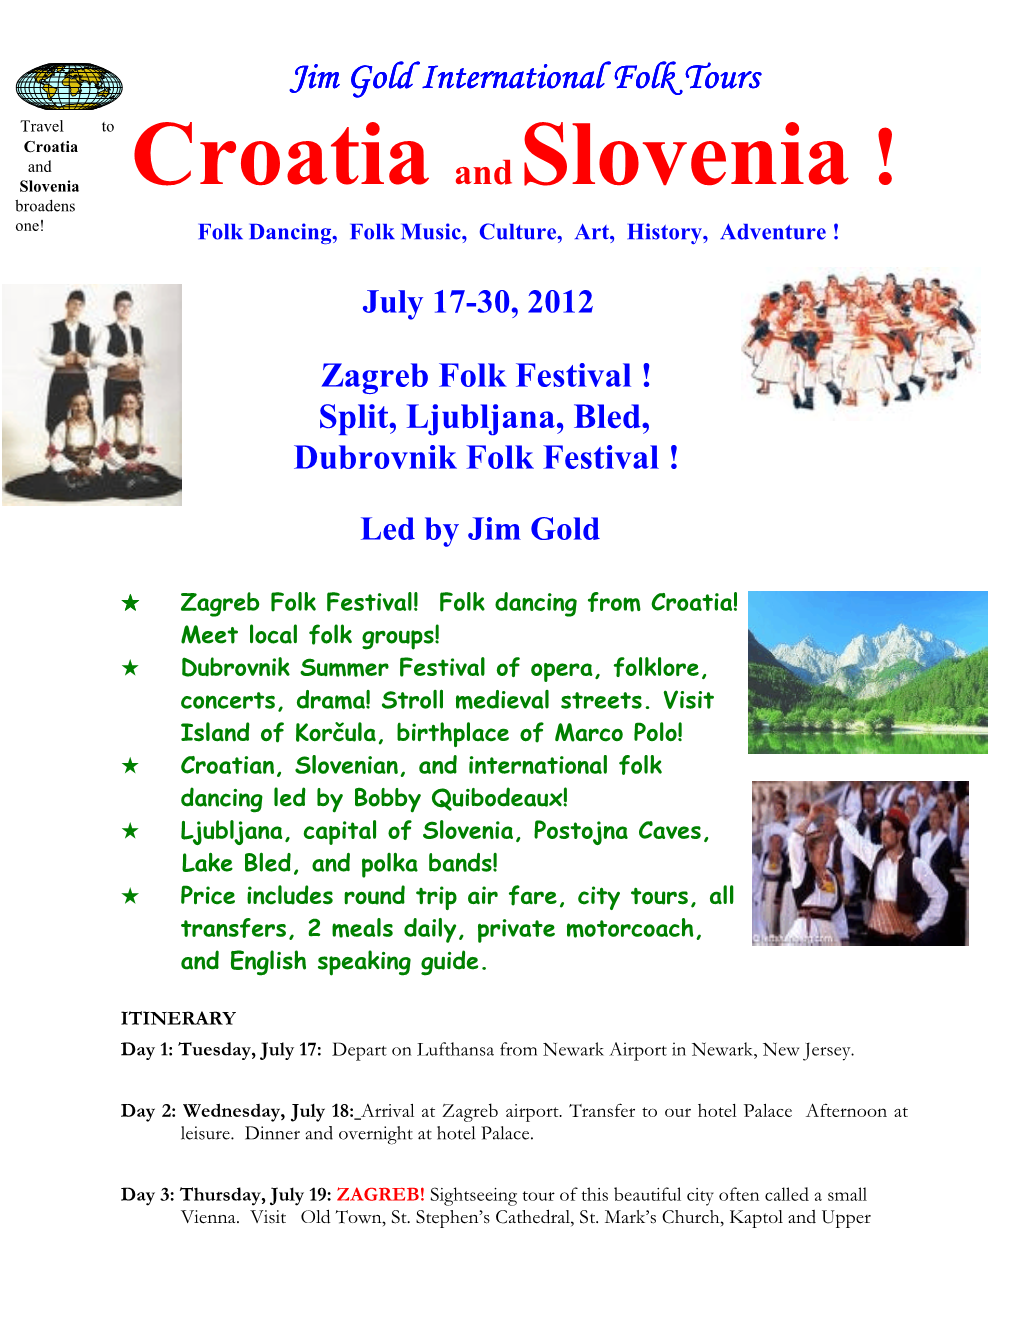 Croatia and Slovenia. July 2012